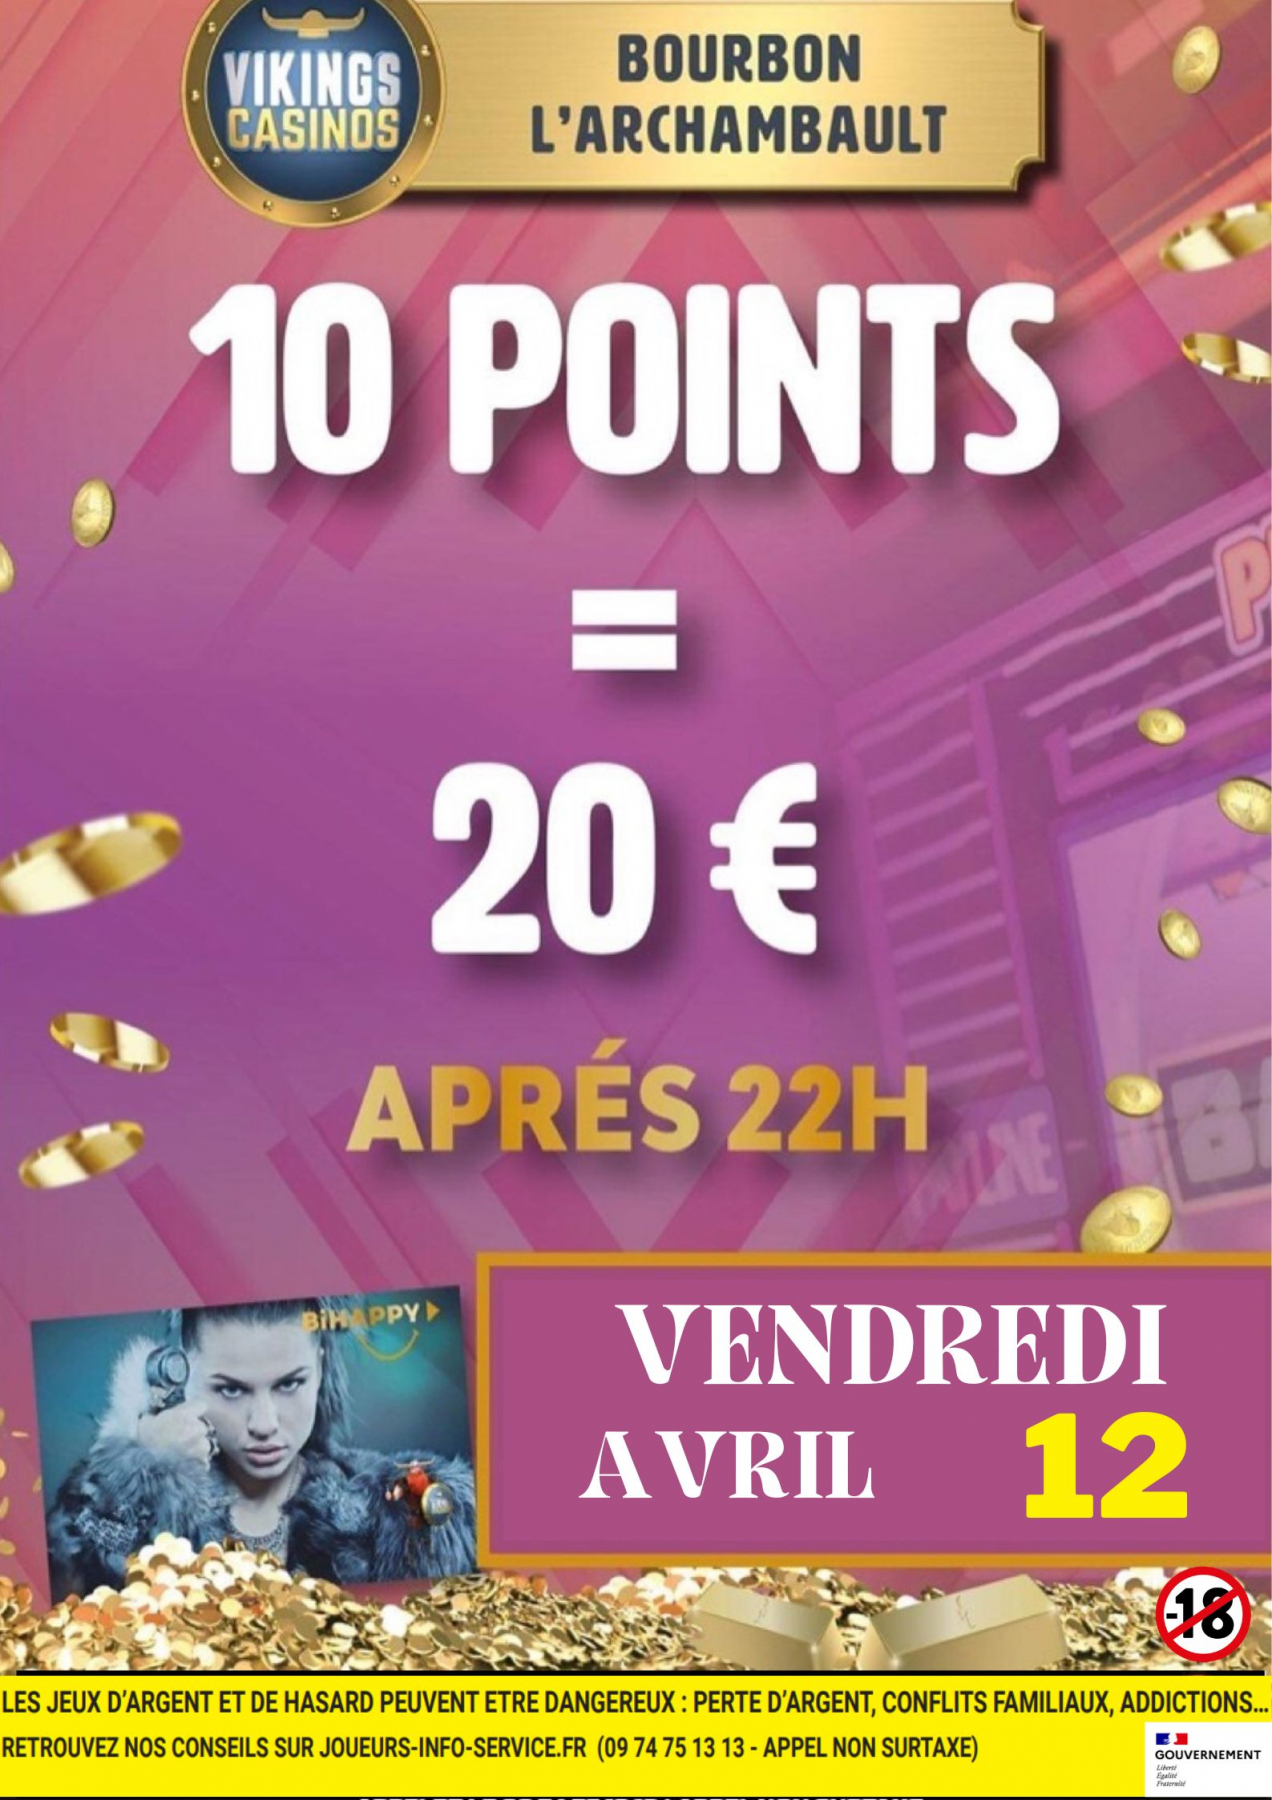 Night 10 points 20€ après 22h